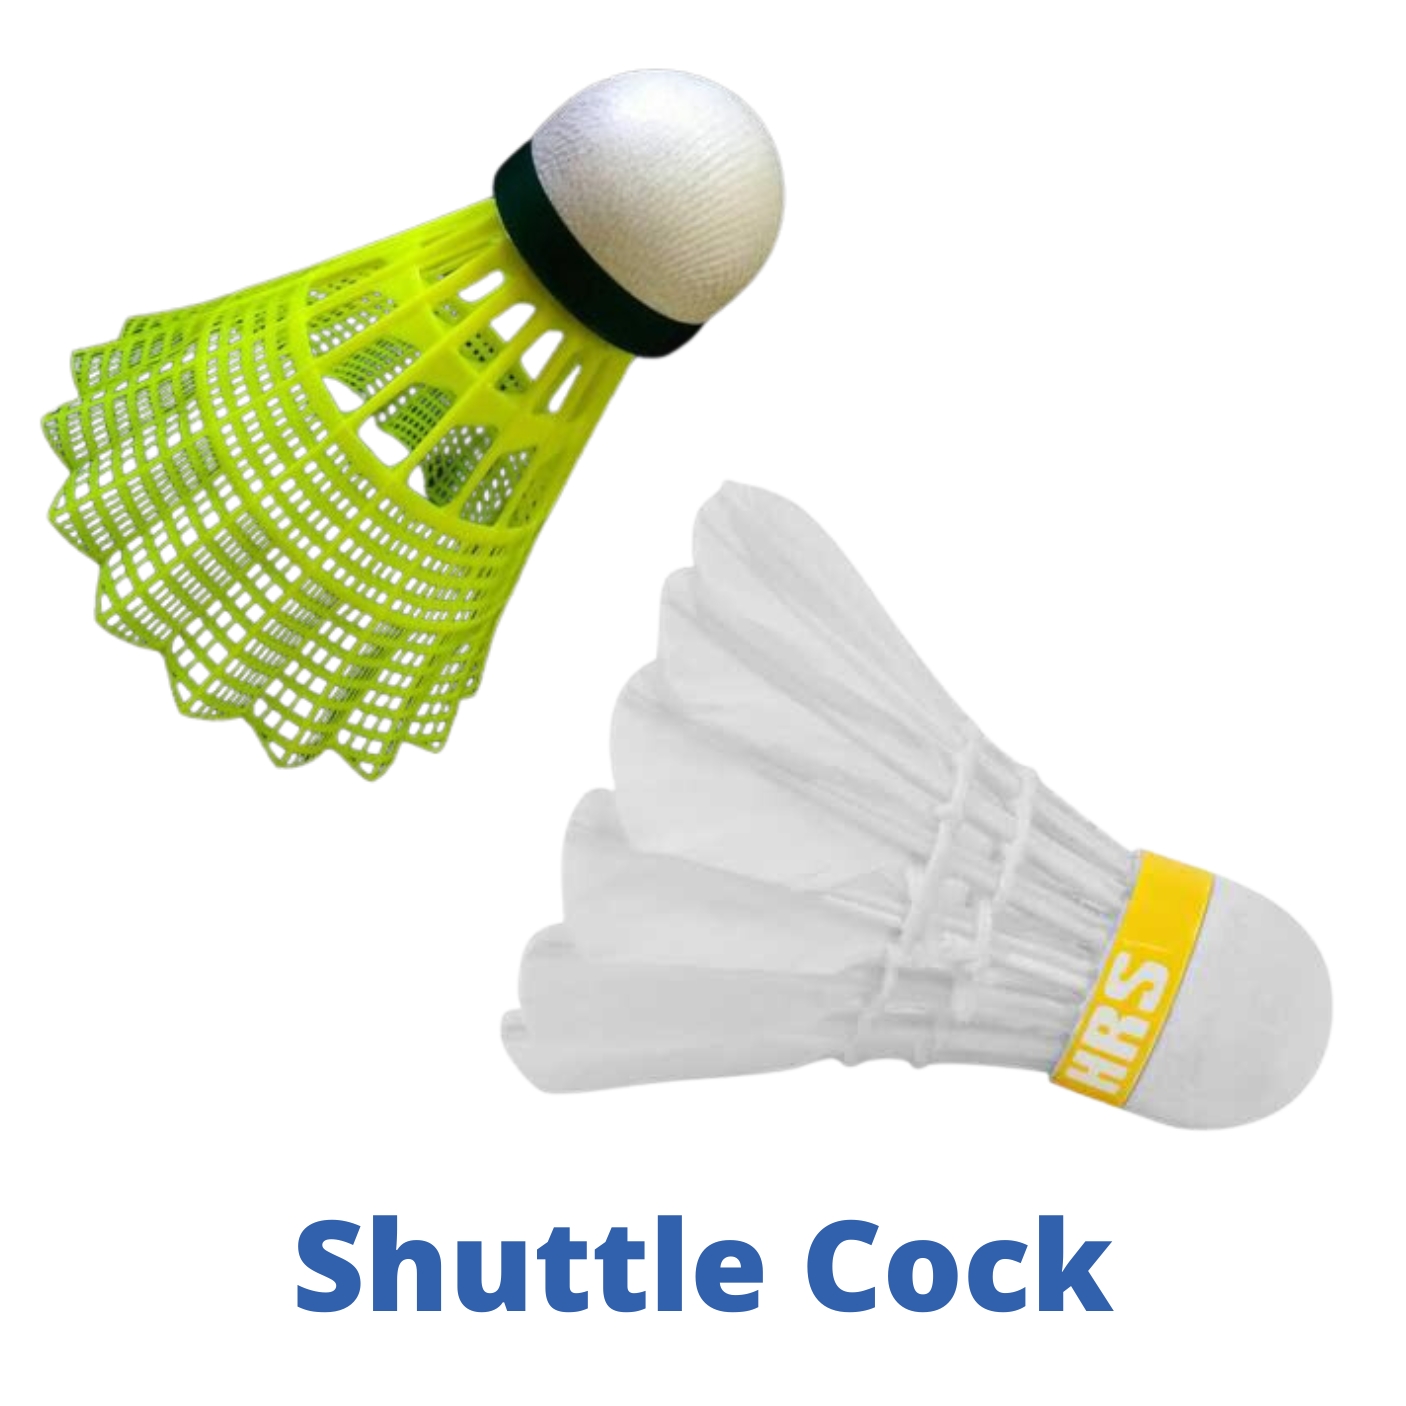 Shuttle Cock